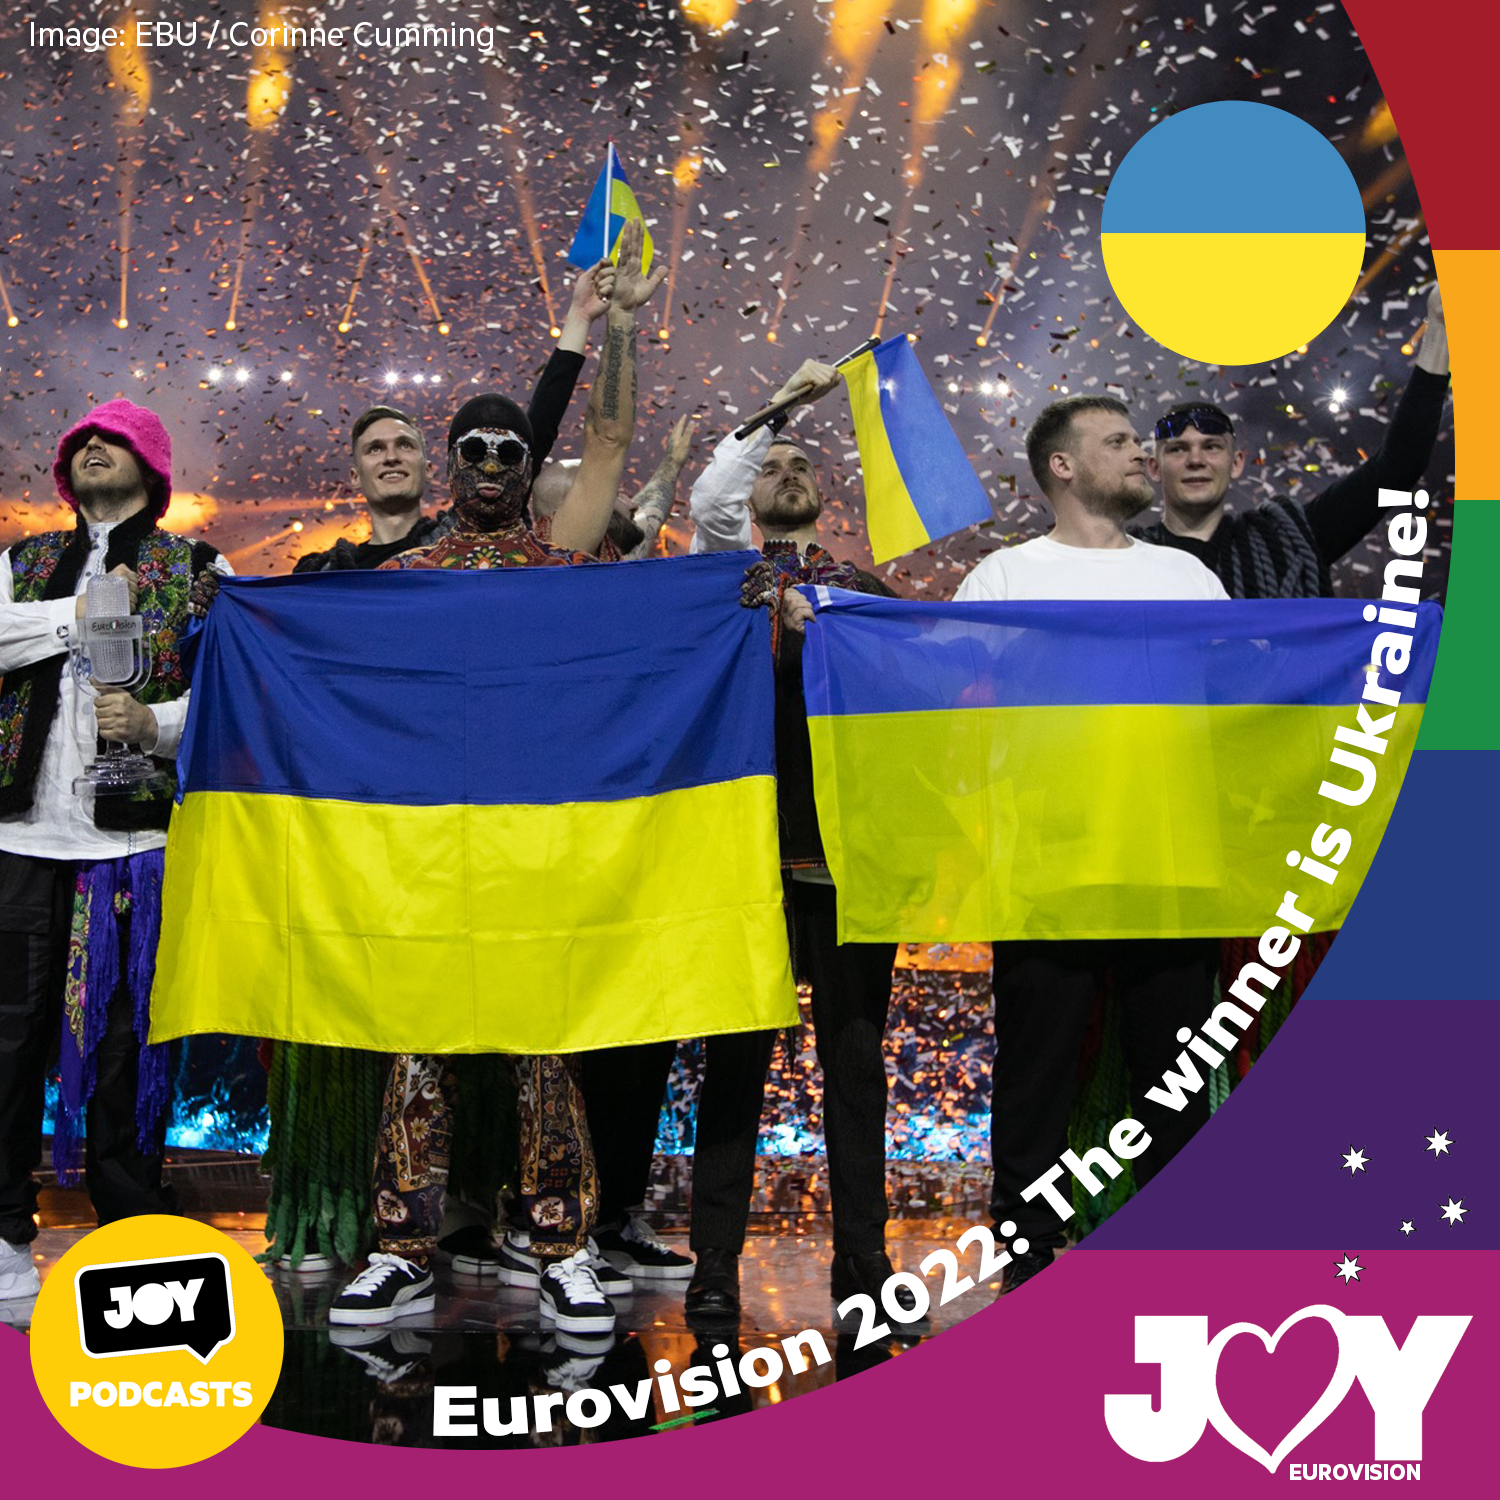 Eurovision 2022: The winner is Ukraine!